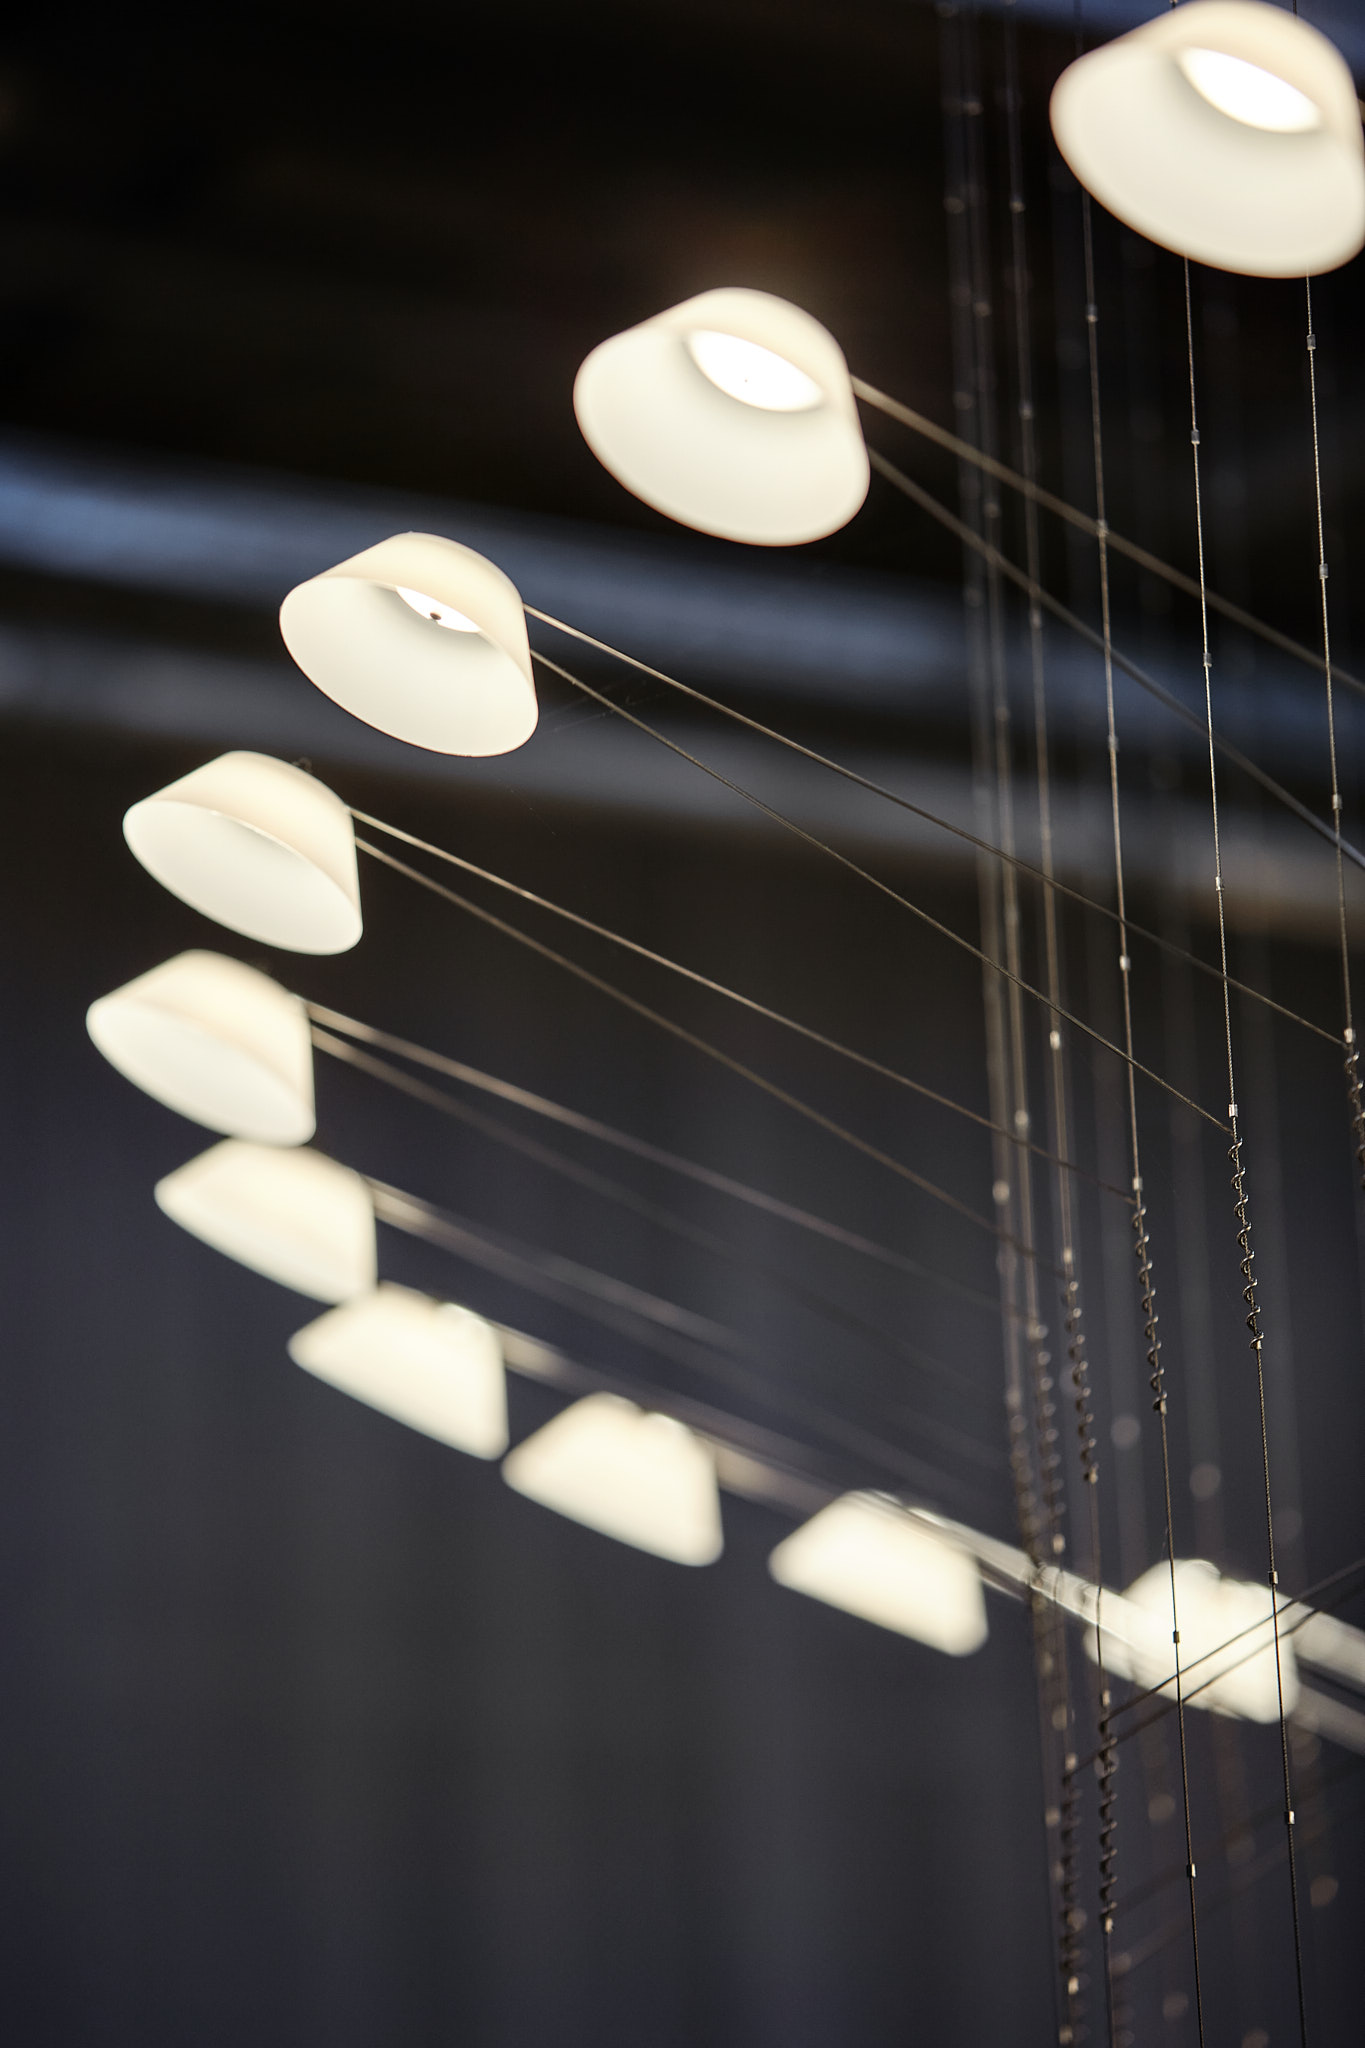 Detail photo of VANTOT's Liiu at Kazerne, Eindhoven. Flexible suspension lamp system, consisting of several led lights.